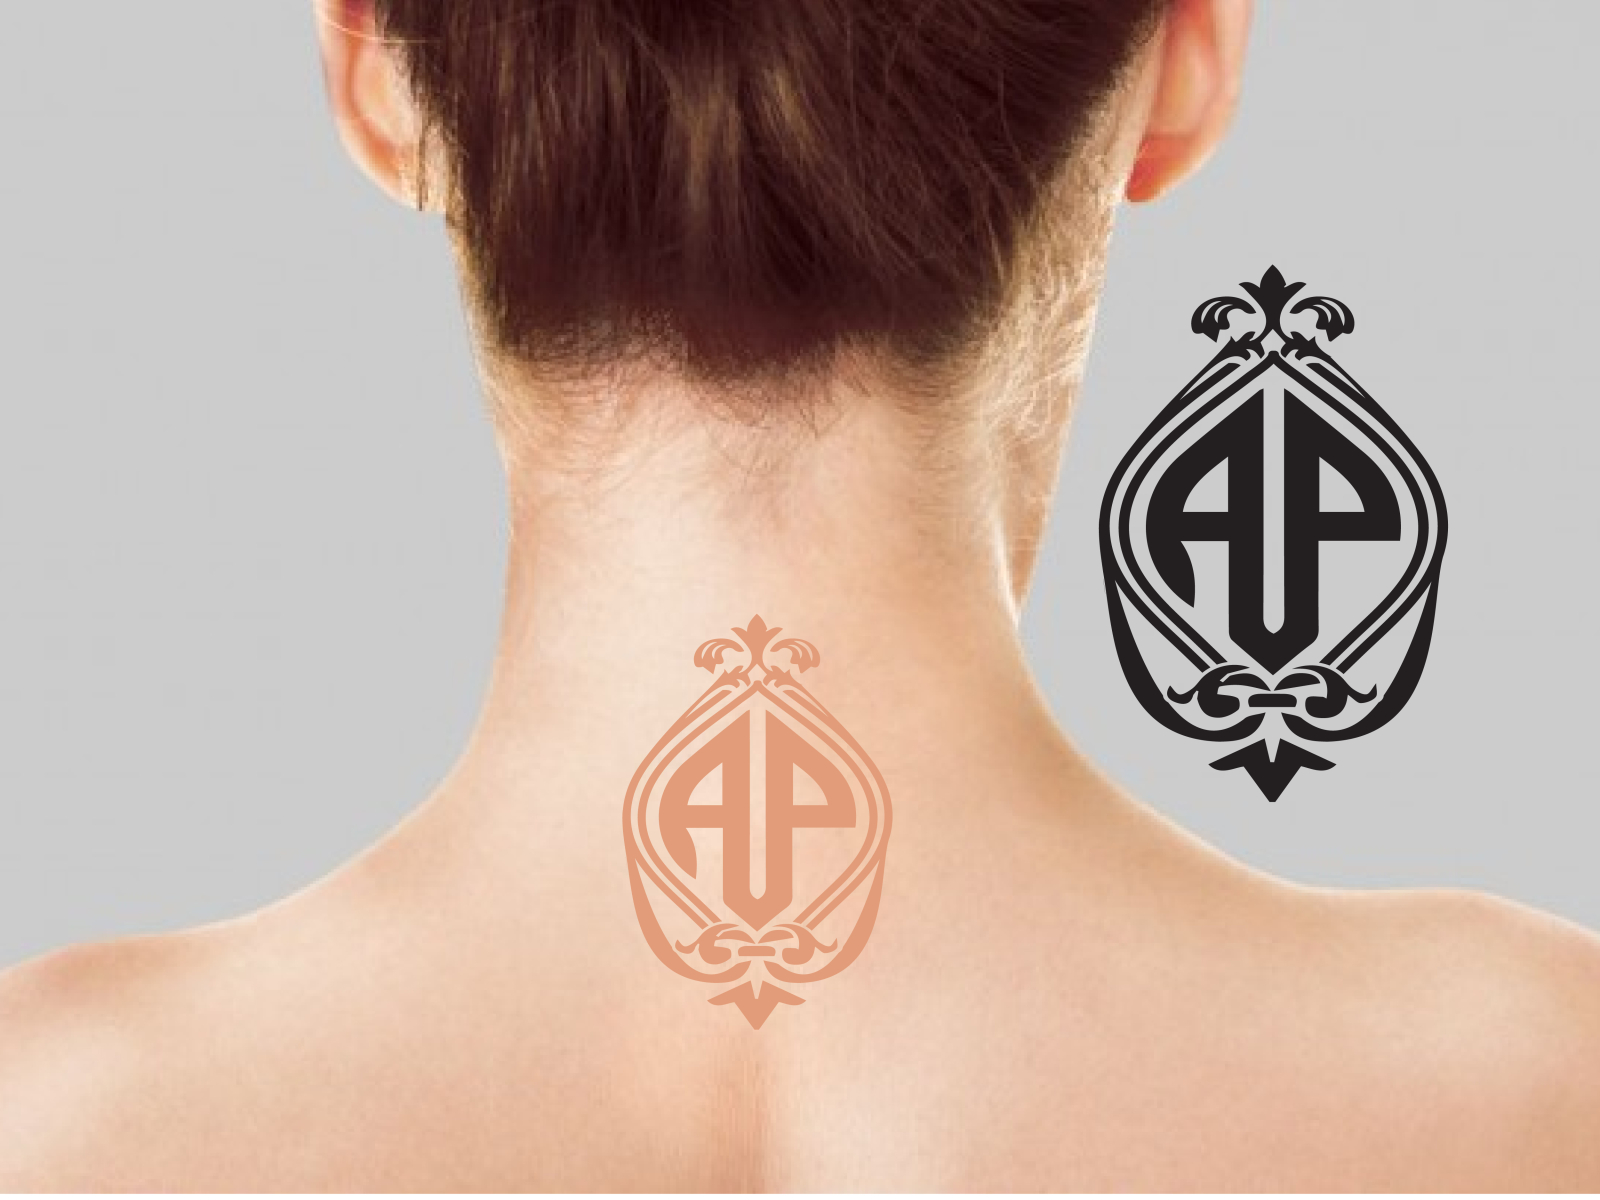 Tattoos denote gang affiliation